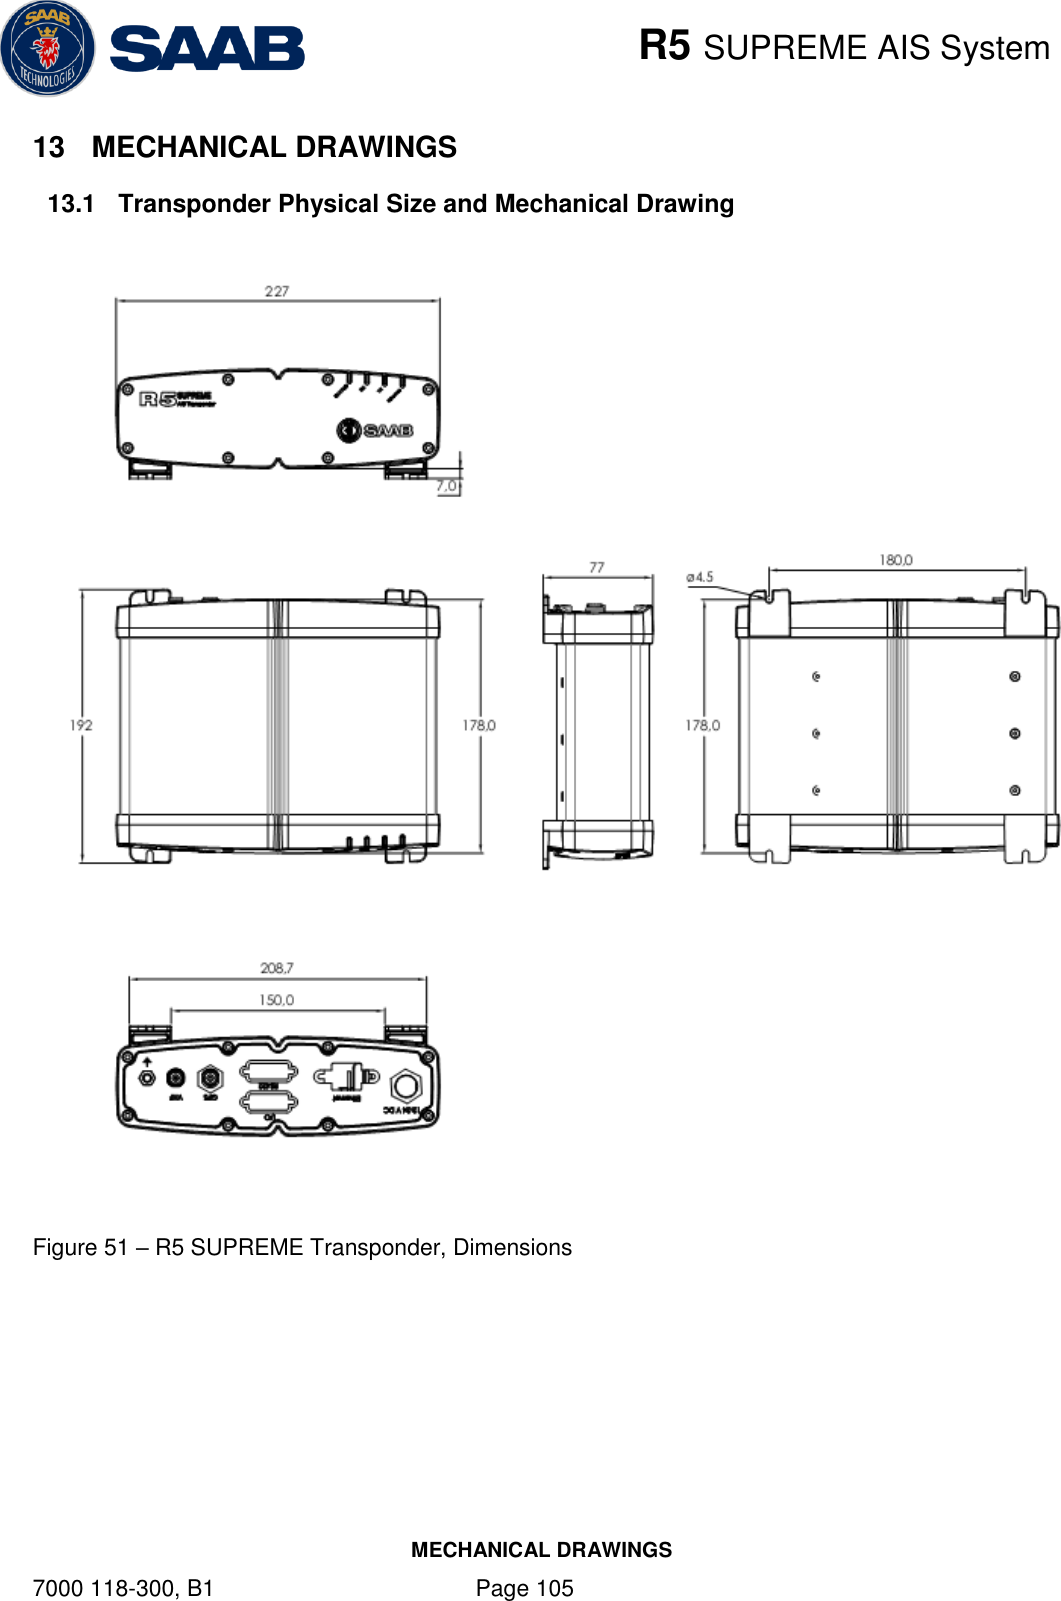    R5 SUPREME AIS System MECHANICAL DRAWINGS 7000 118-300, B1    Page 105 13  MECHANICAL DRAWINGS 13.1  Transponder Physical Size and Mechanical Drawing     Figure 51 – R5 SUPREME Transponder, Dimensions 